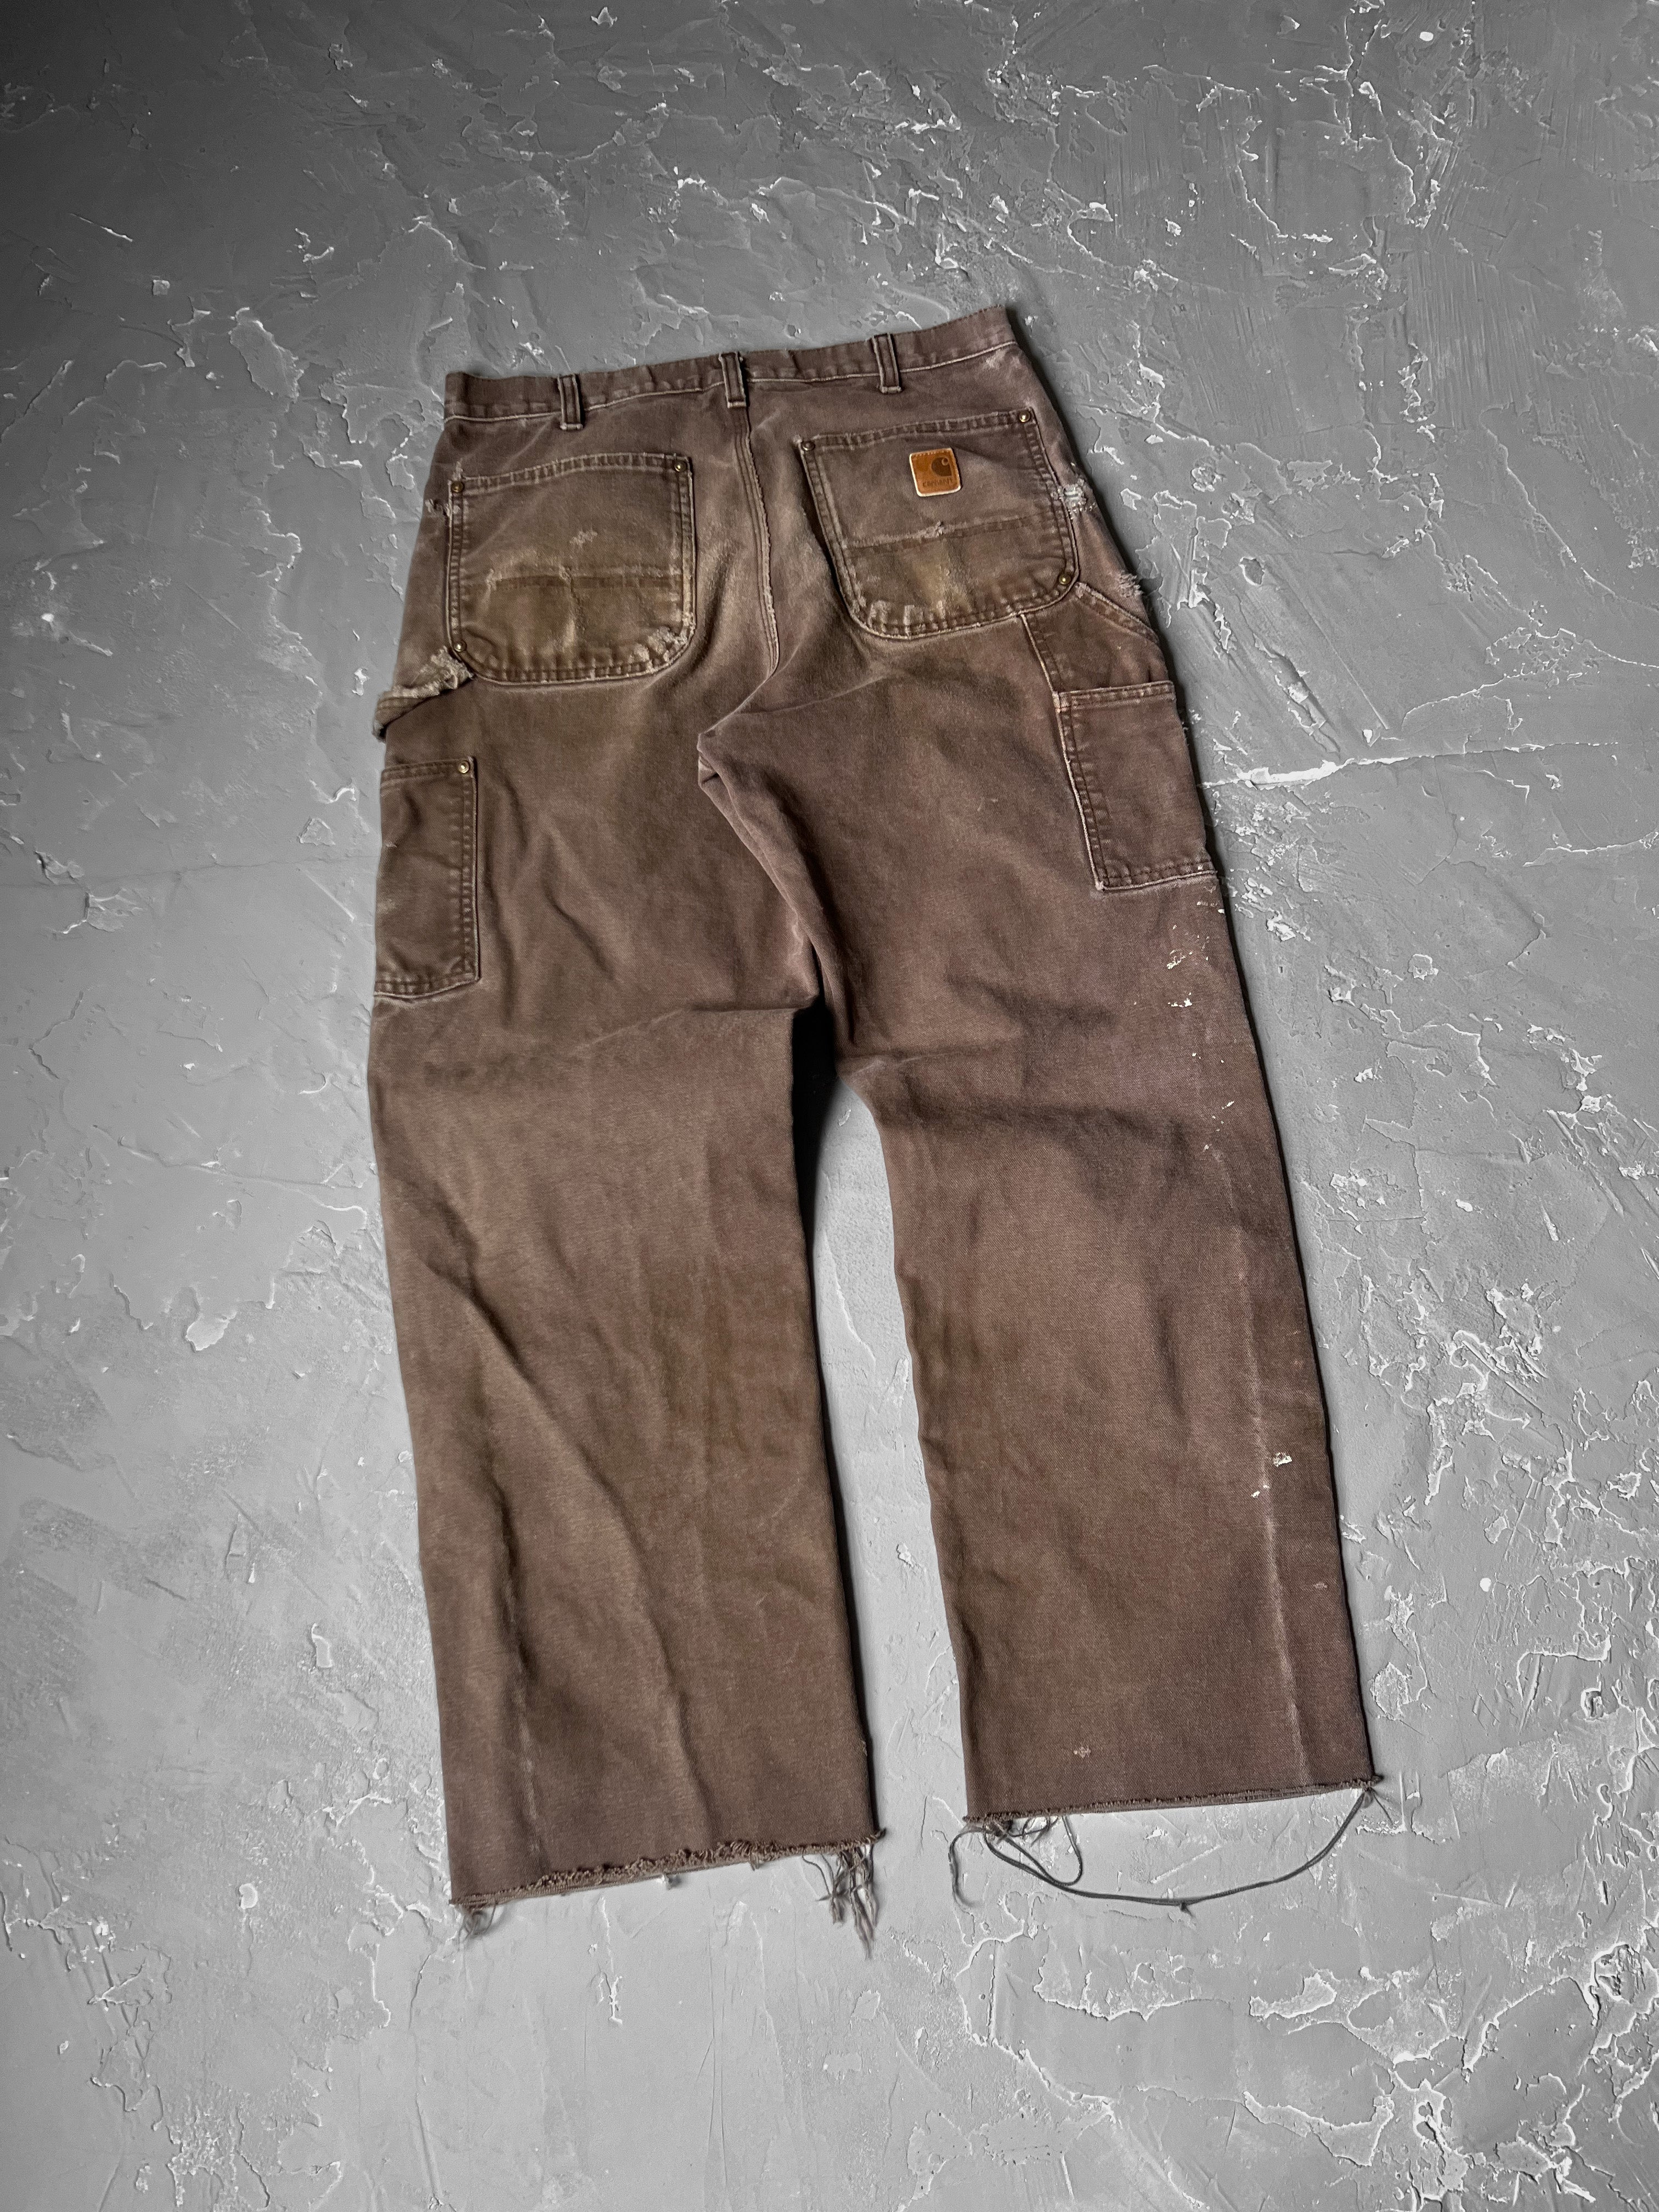 Carhartt Faded Mocha Double Knee Pants [32 x 30]